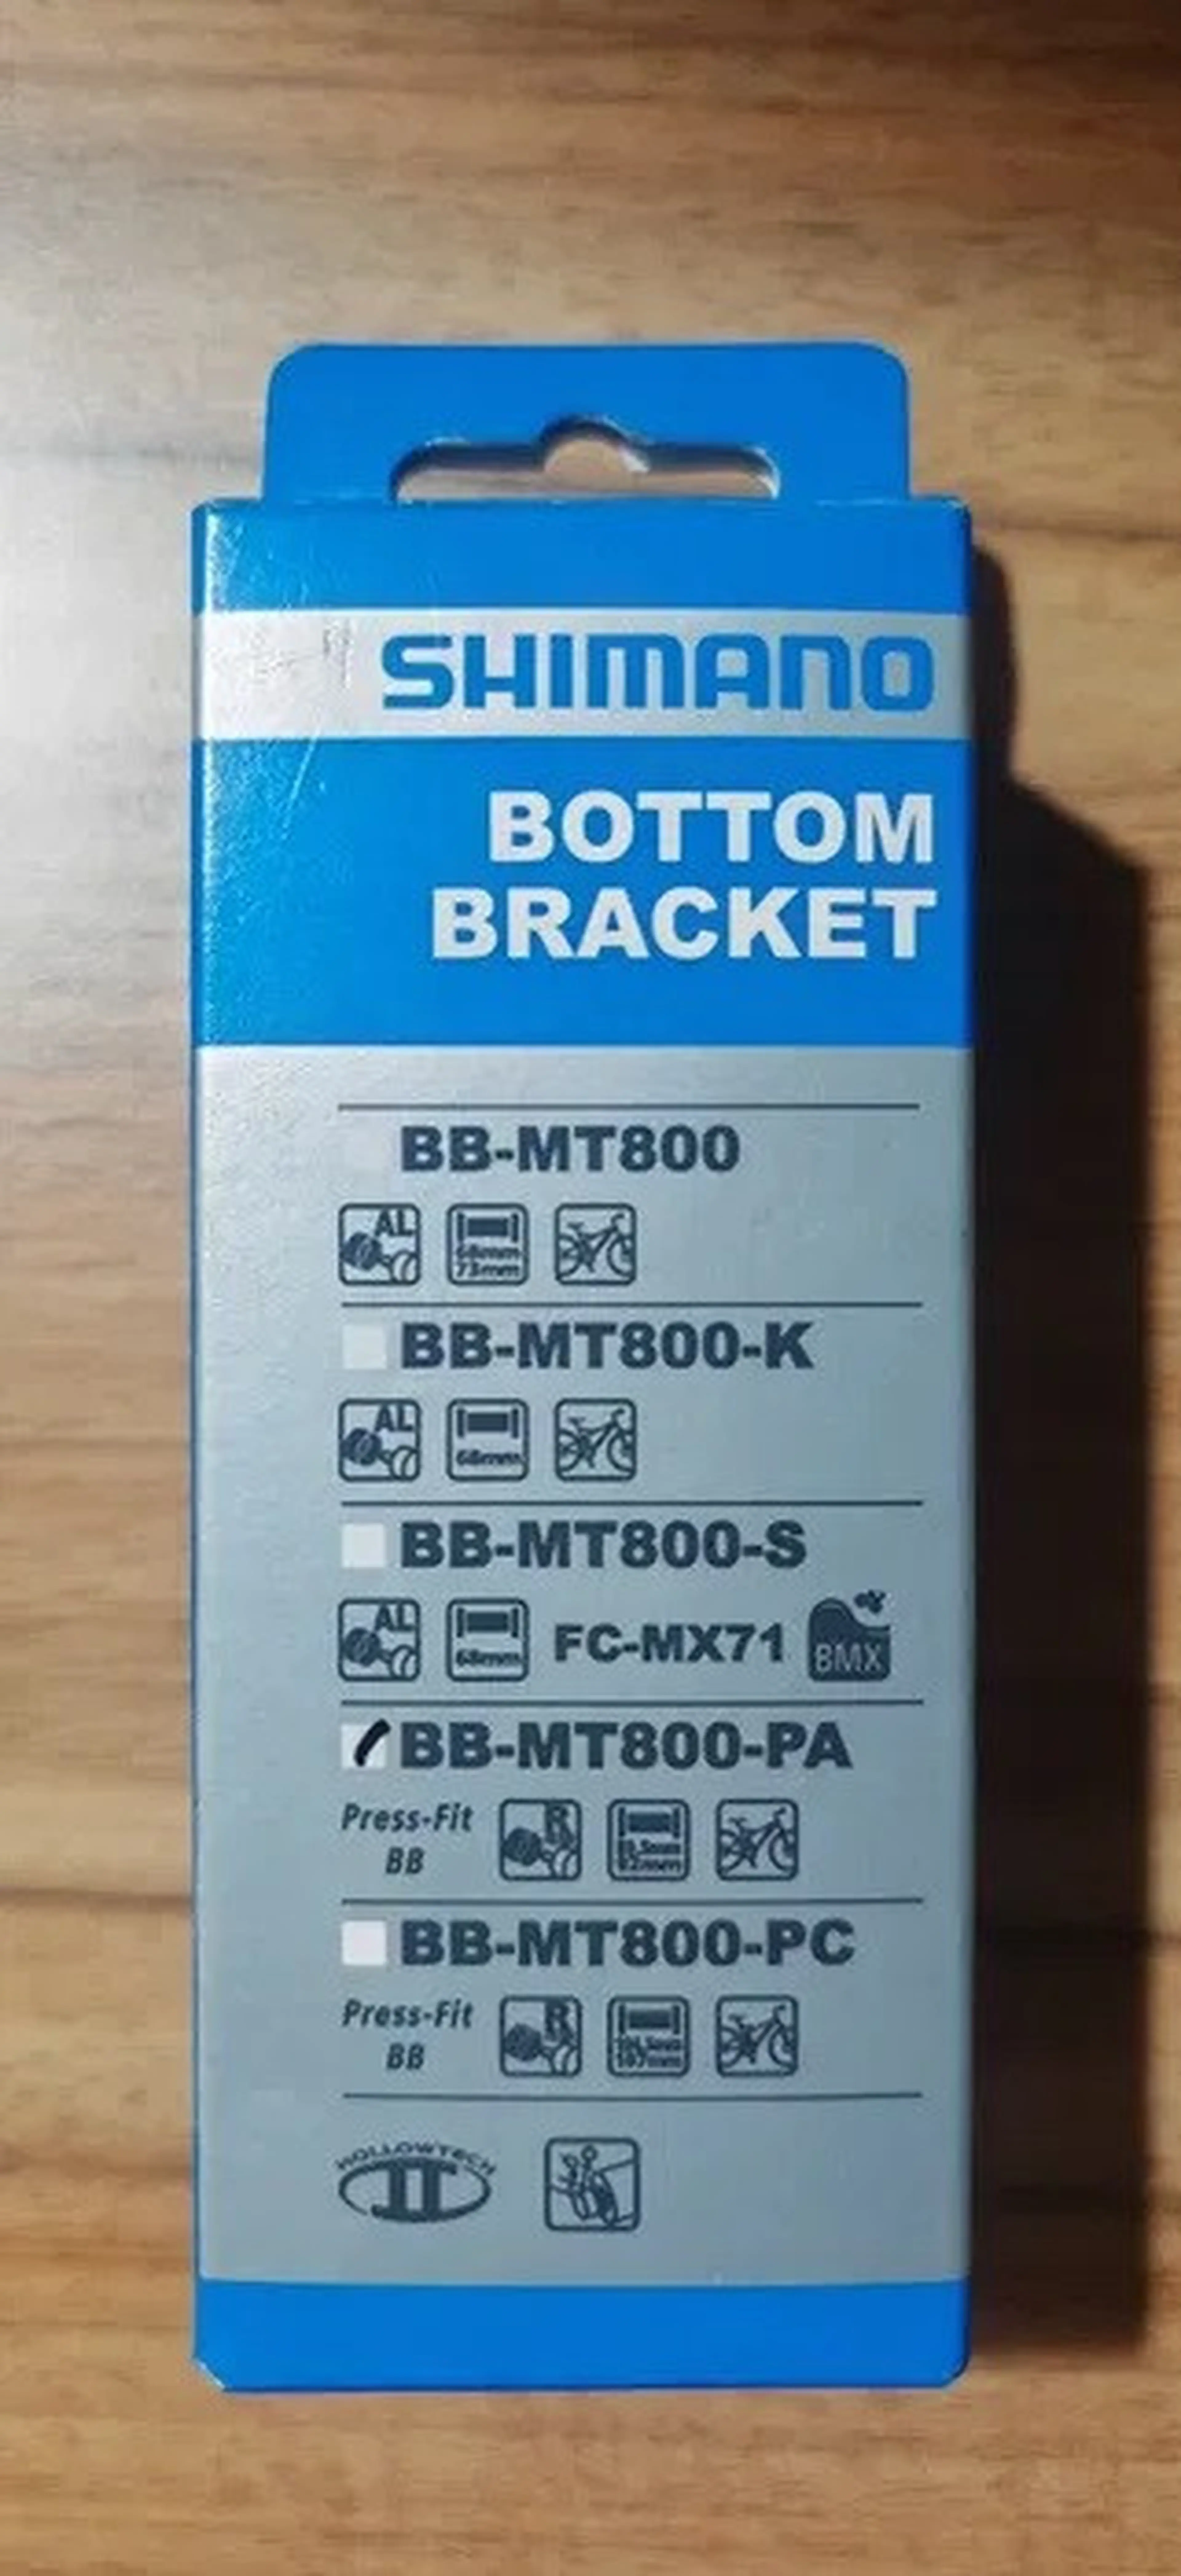 1. Bottom bracket press fit BB-MT-800-PA